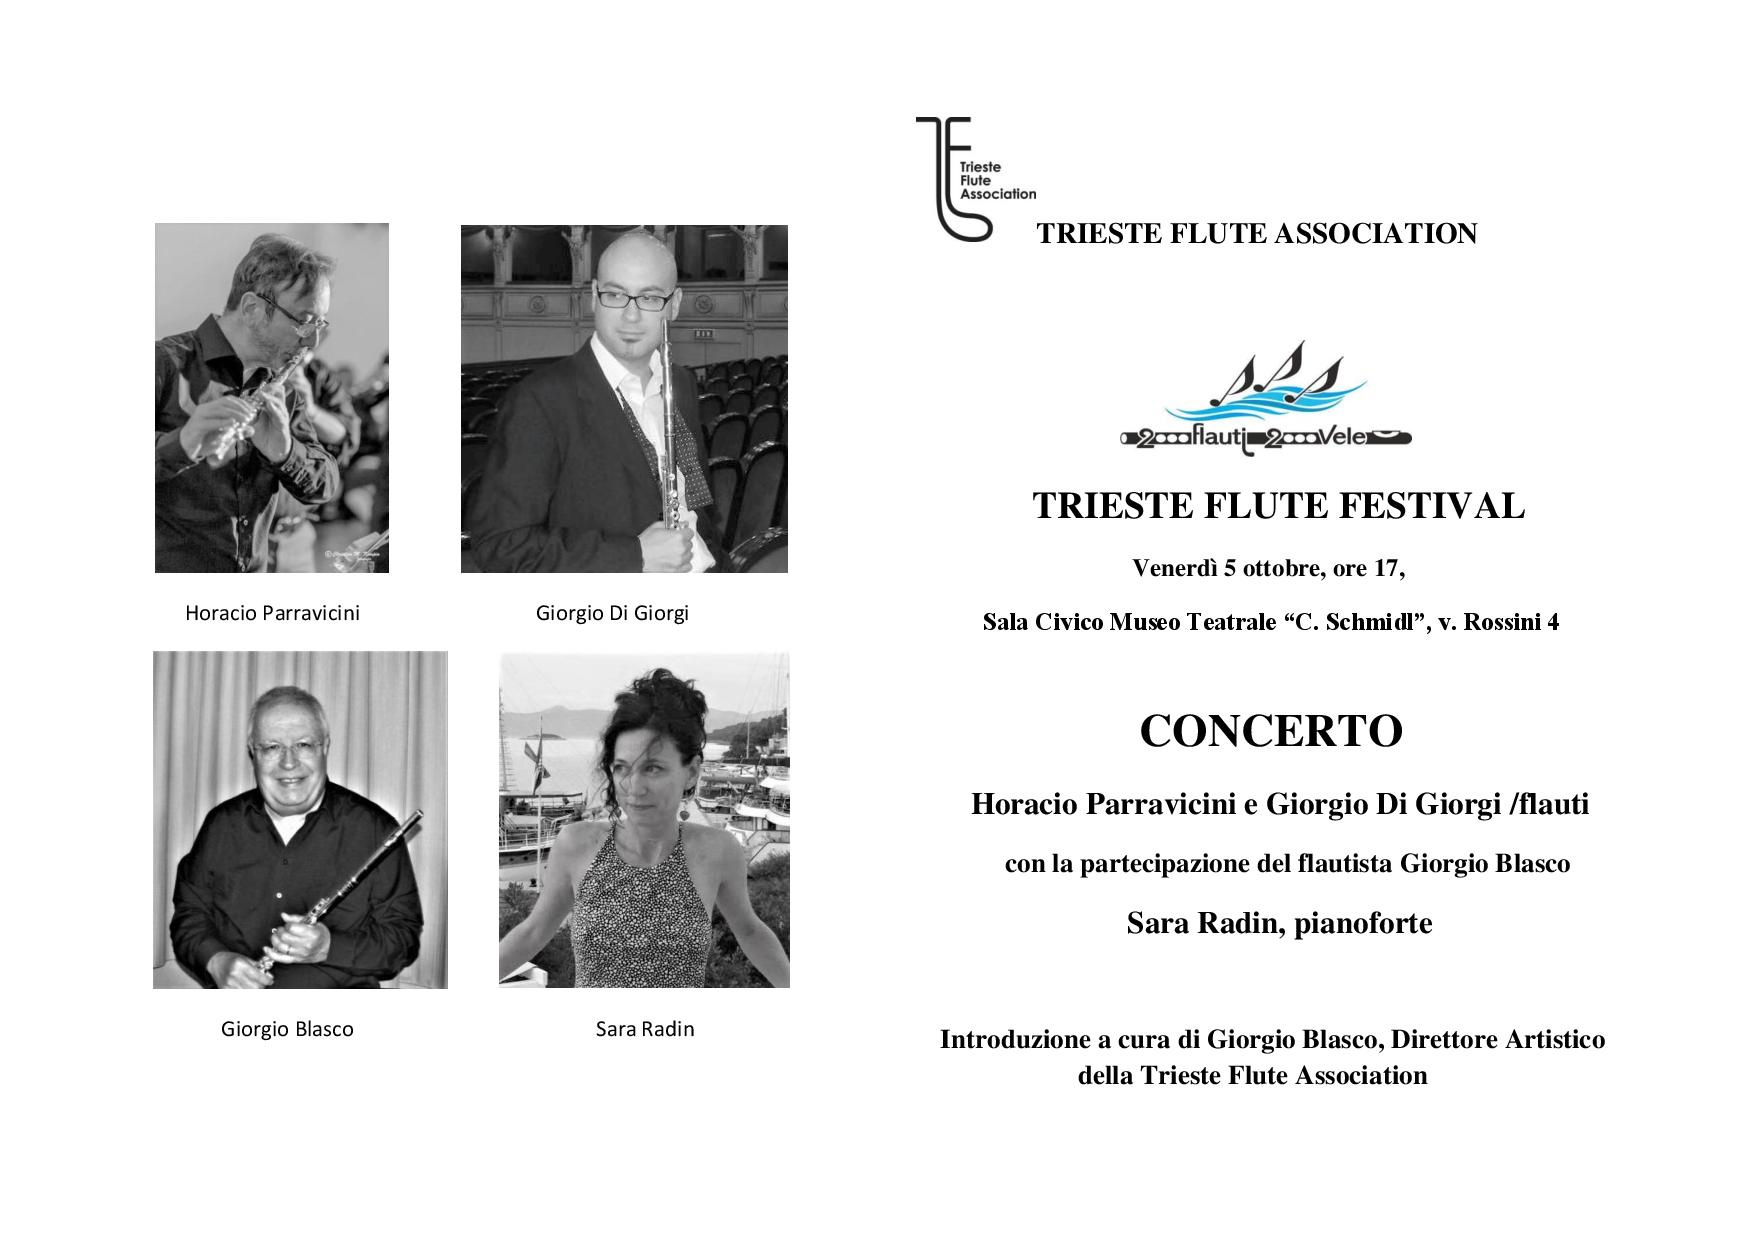 Recital on October 5, 2018 at Trieste Flute Festival - Horacio Parravicini